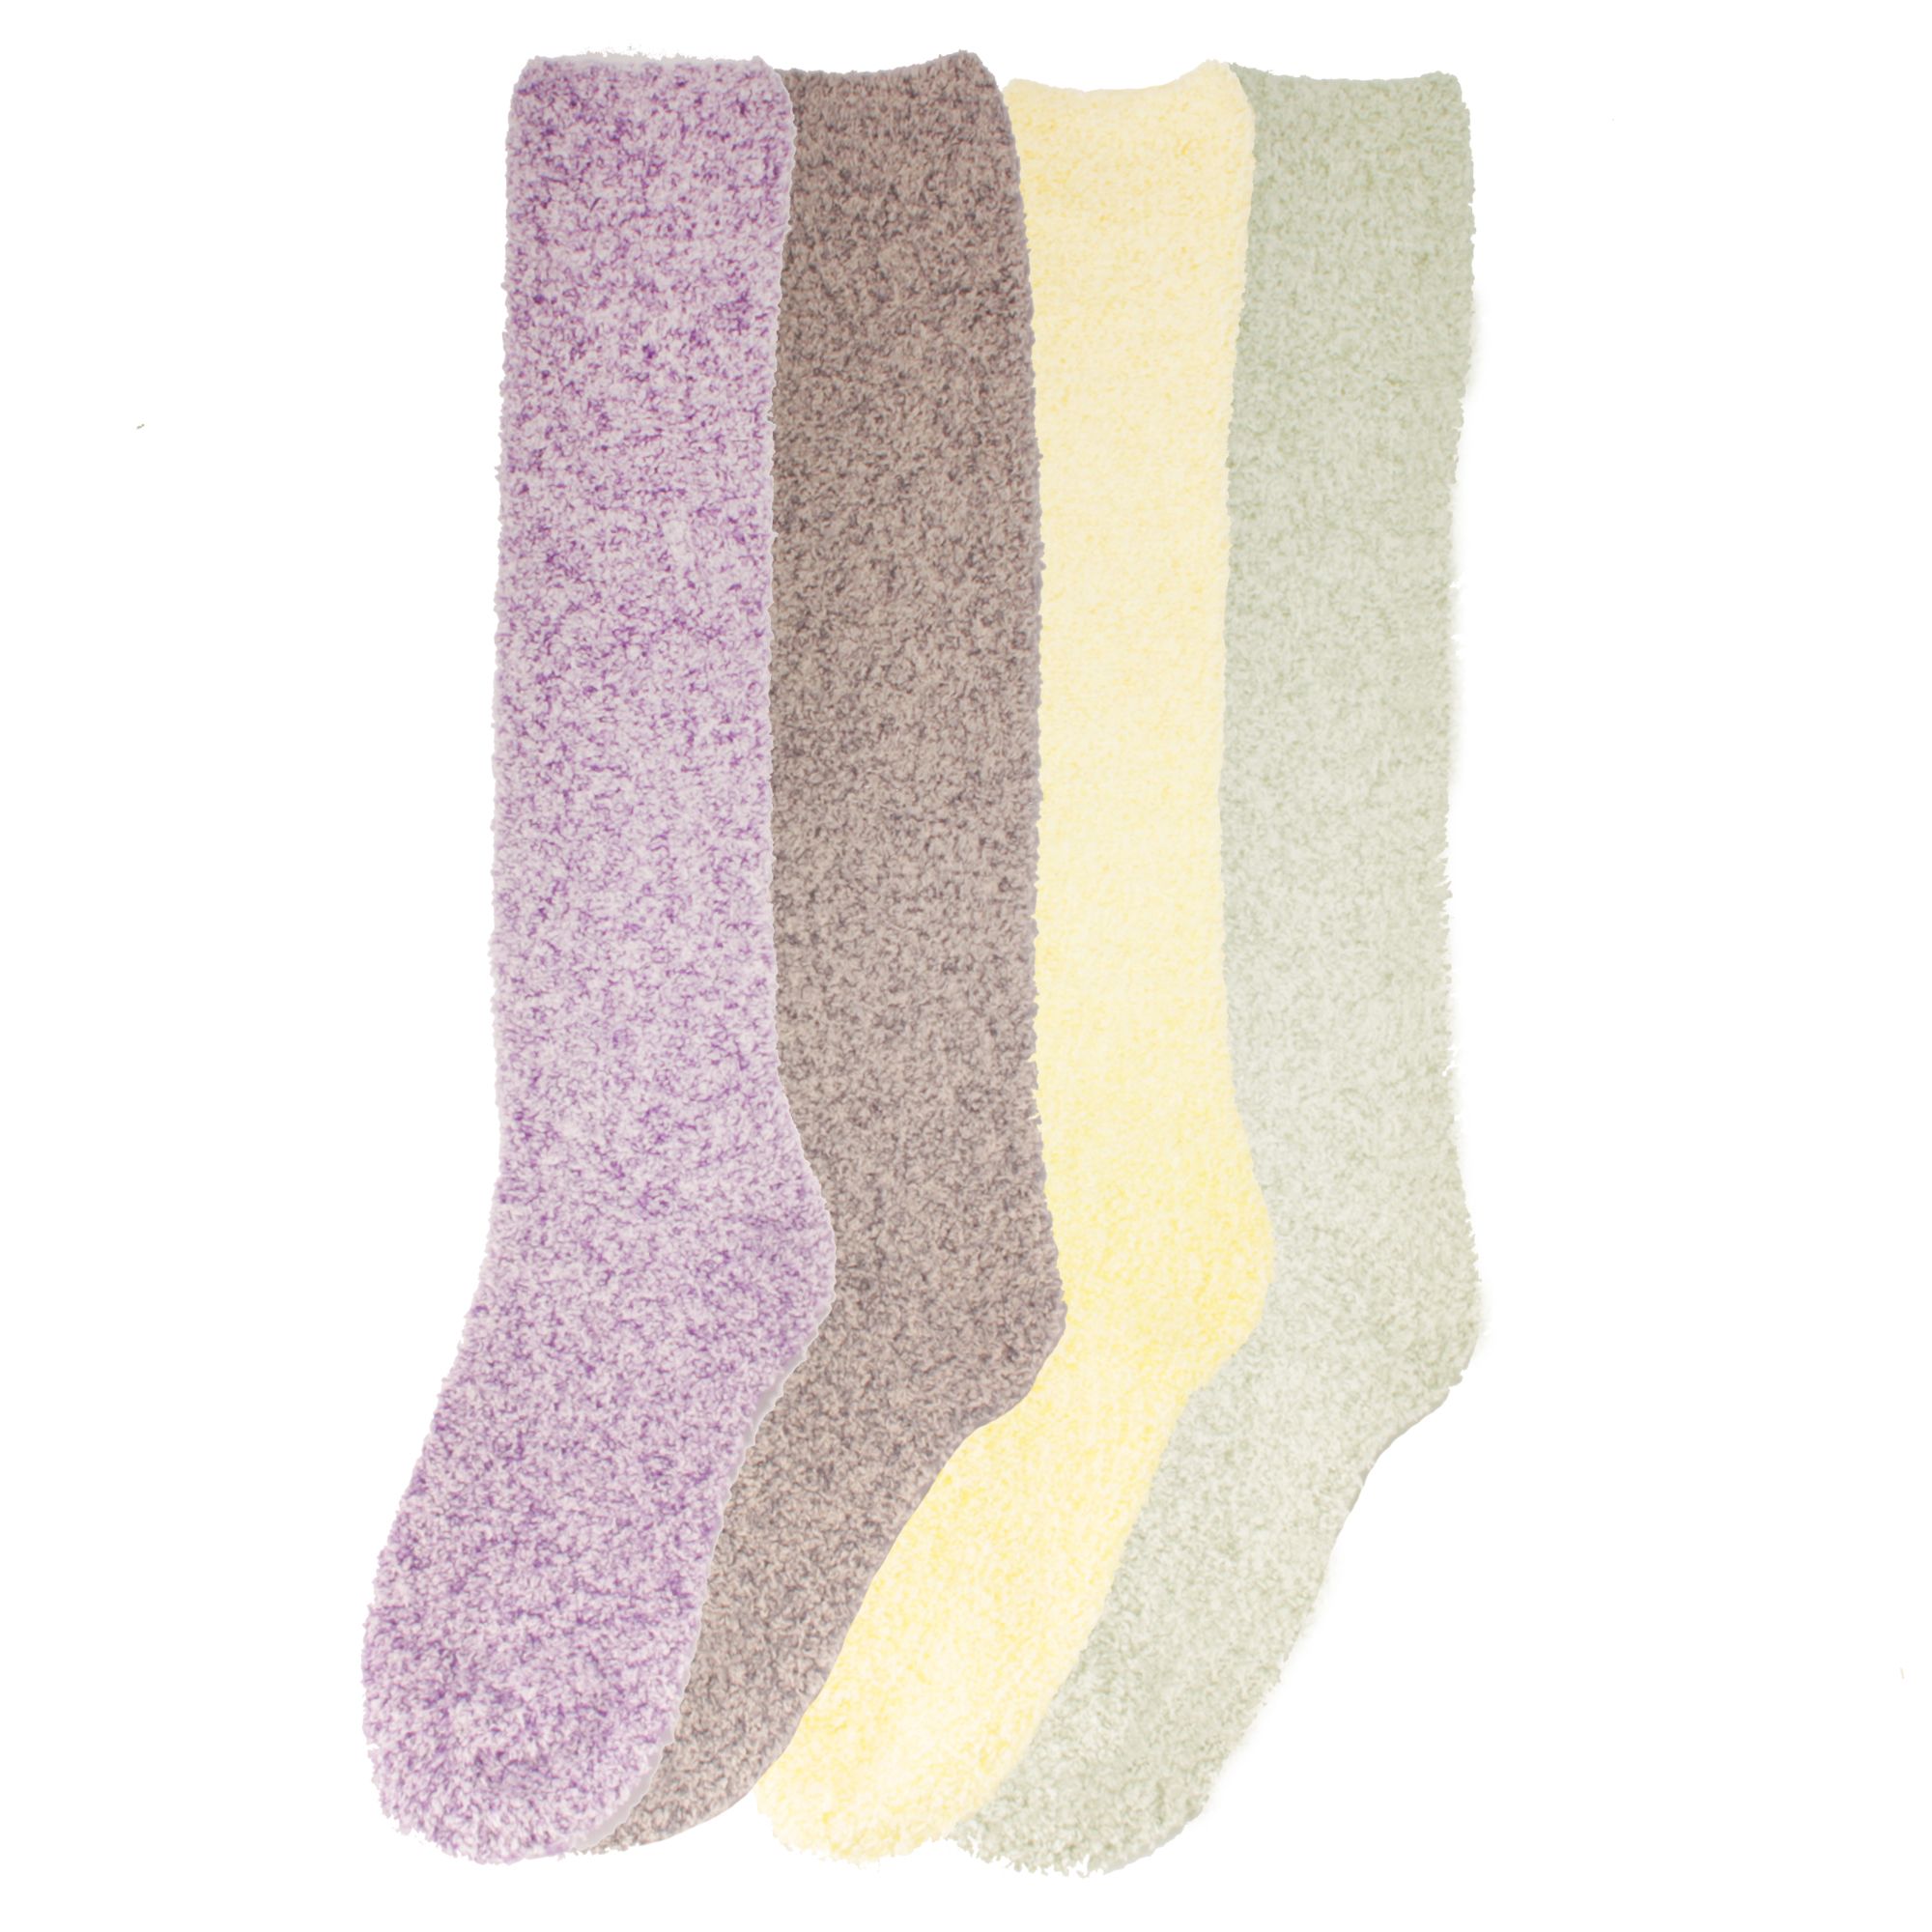 Women's Fuzzy Feather Soft Cozy Knee High Socks - Assortment 4B - 4 Pairs - Size M/L (4-10) | Walmart (US)